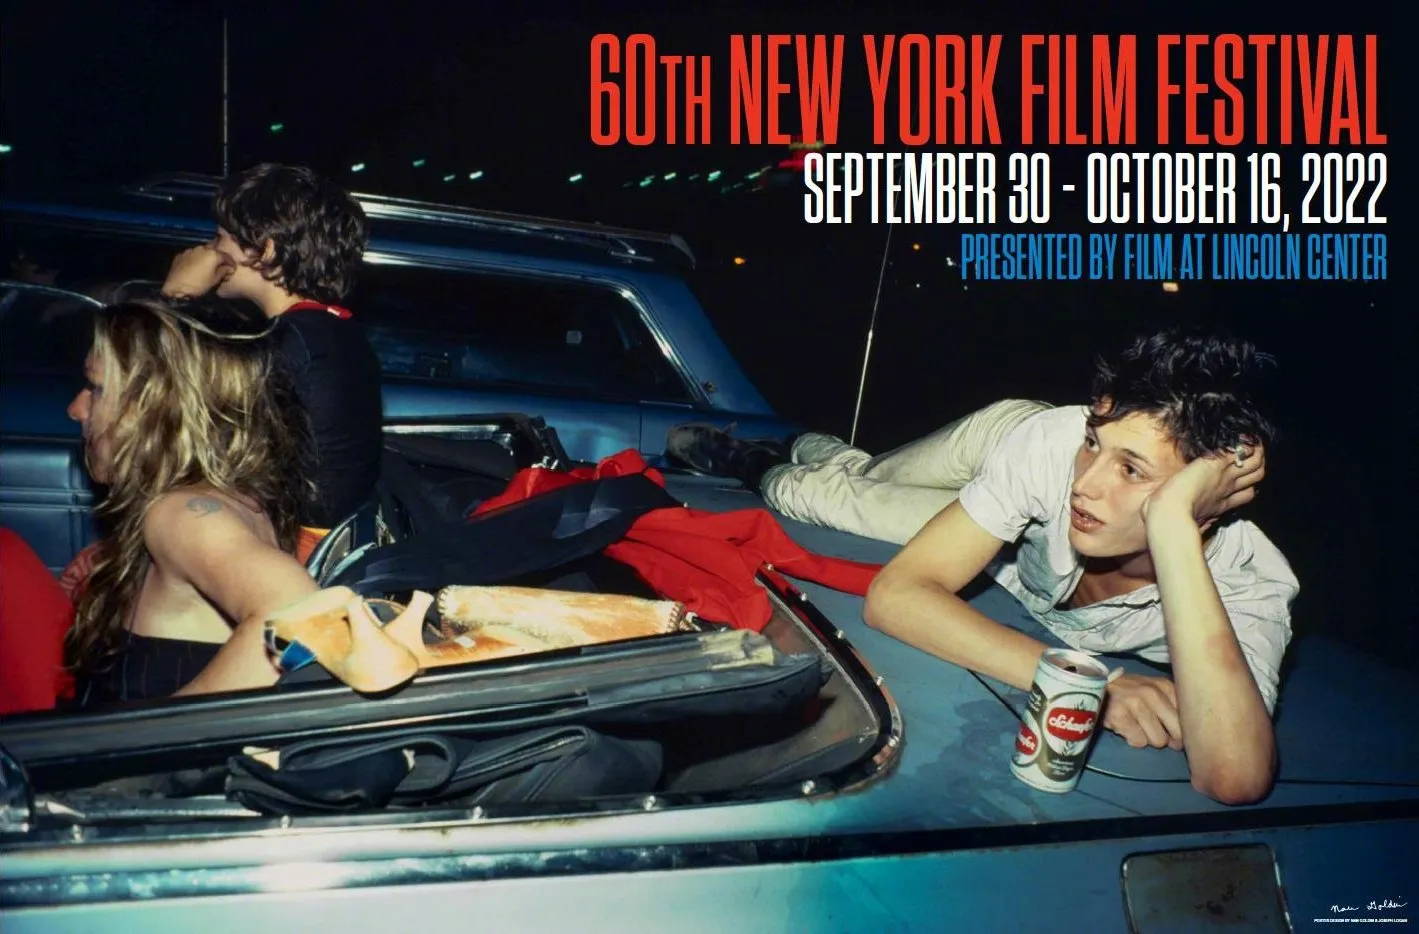 Official Poster for the 60th New York Film Festival | FMV6